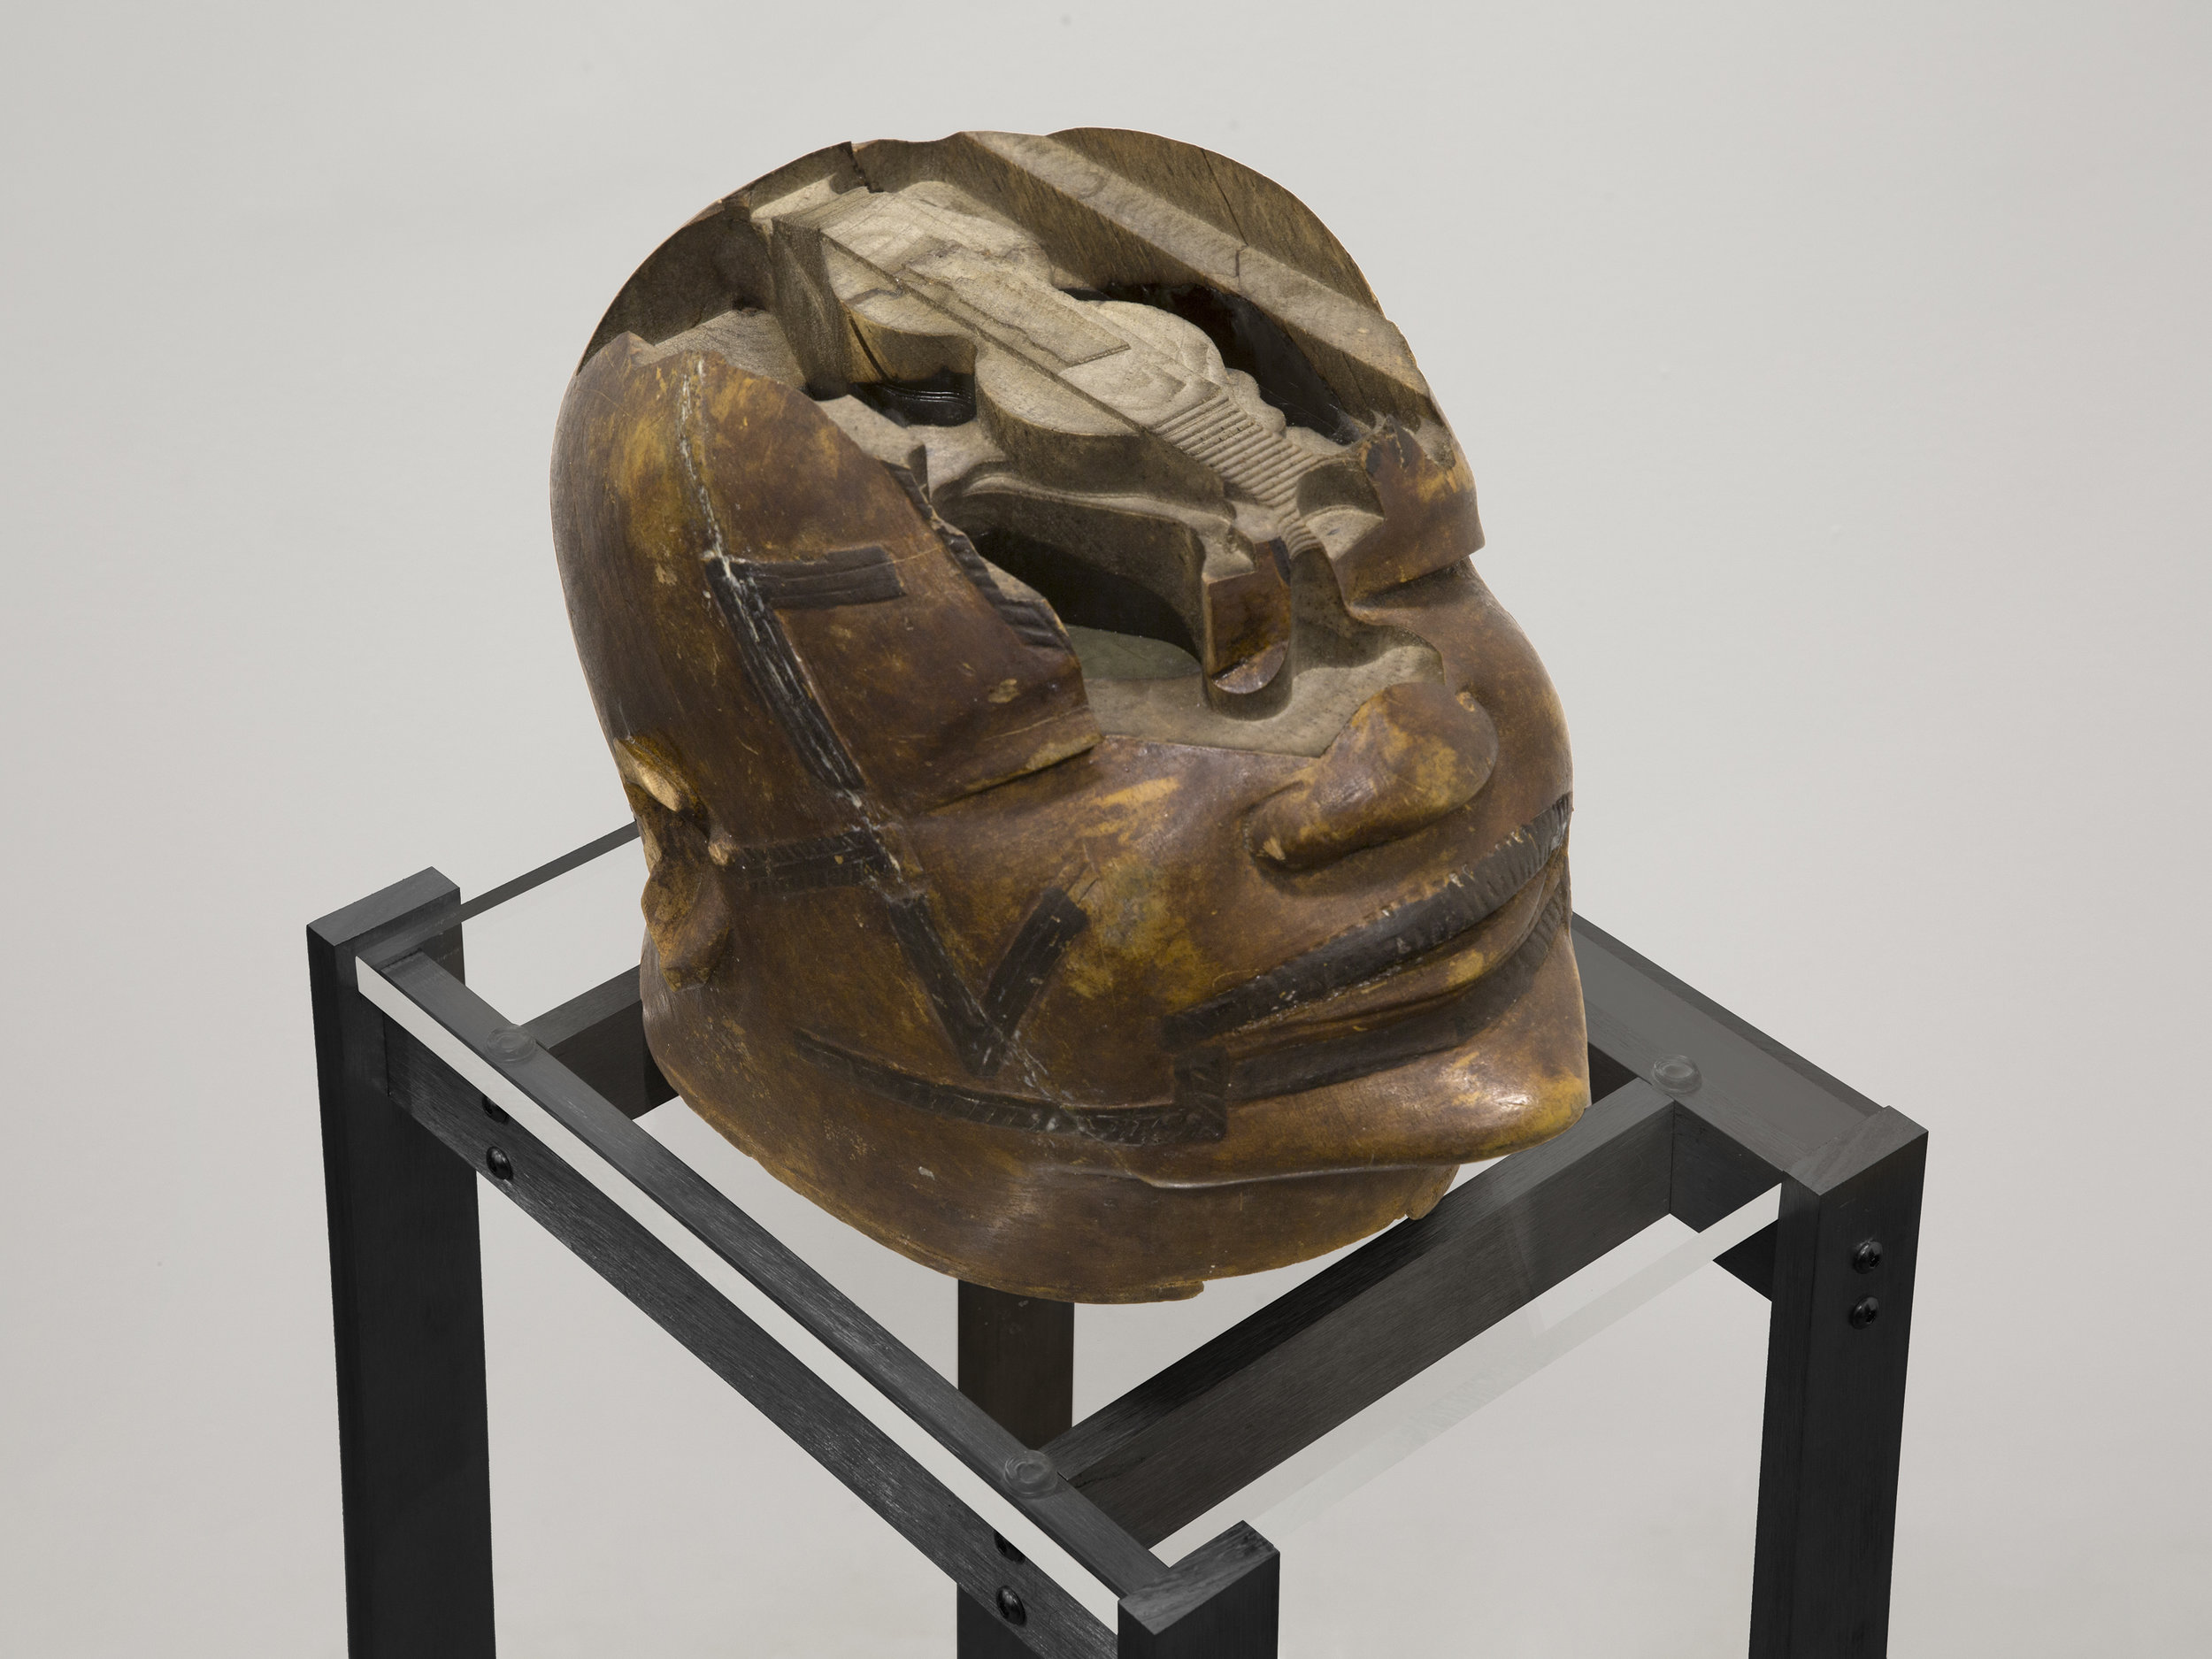  Matthew Angelo Harrison,  Synthetic Lipiko - Caliper Study , 2018, Wooden sculpture, anodized aluminum, acrylic. 56 x 21 1/2 x 22 3/4 inches 